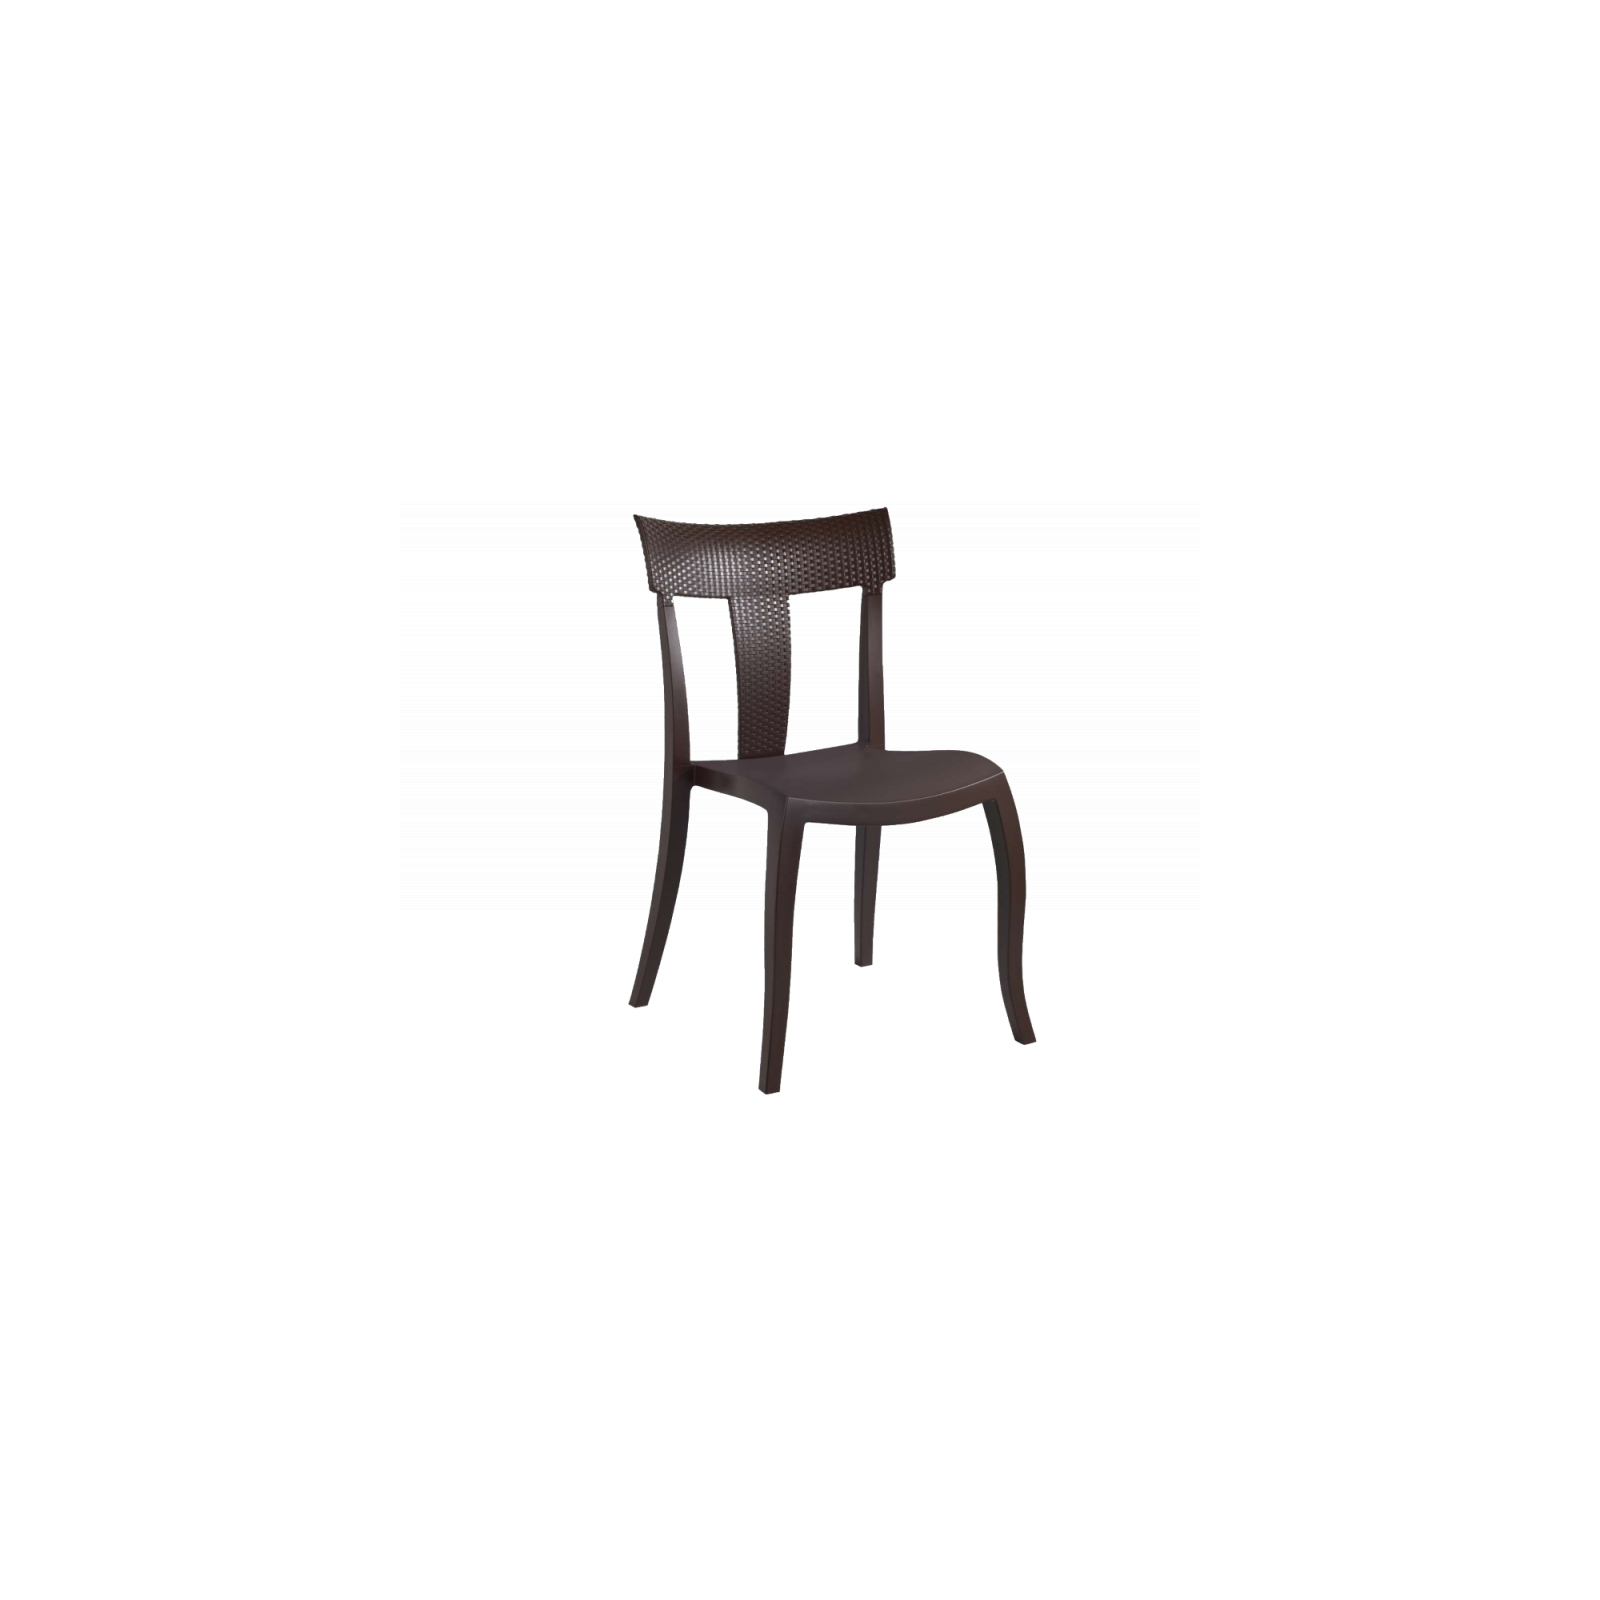 Кухонный стул PAPATYA toro-s под ротанг белый, цвет 01 (2192)